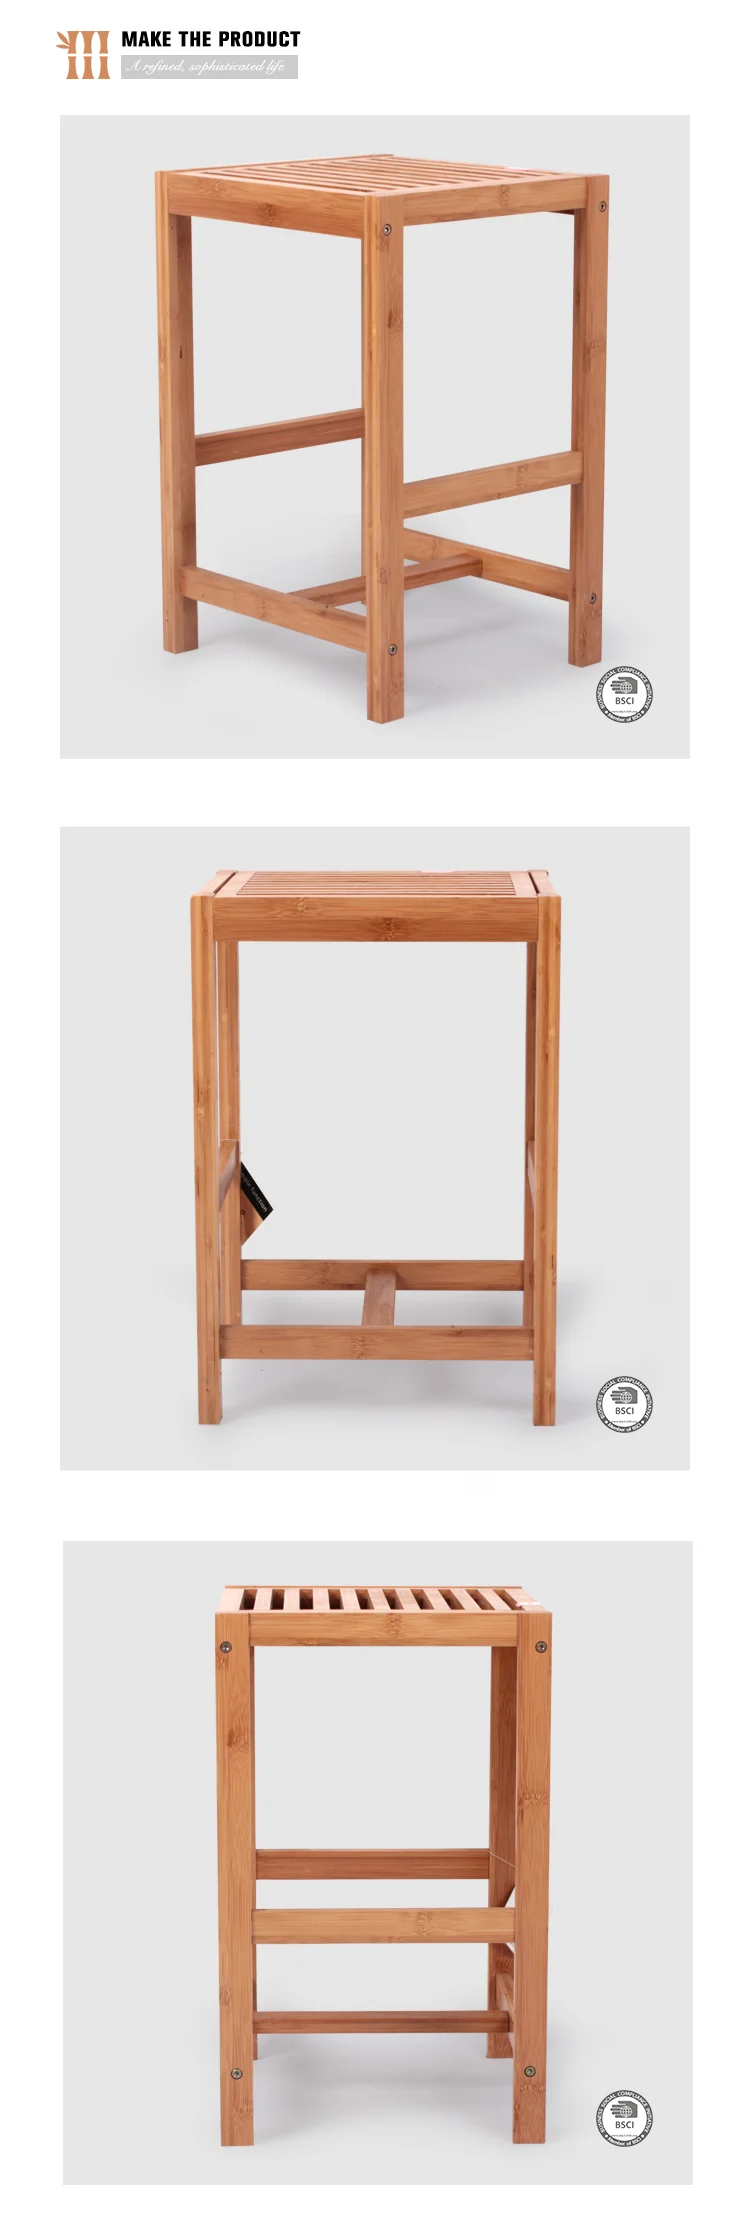 2017 New Product Wooden Indoor Bamboo Patio Outdoor Furniture Design